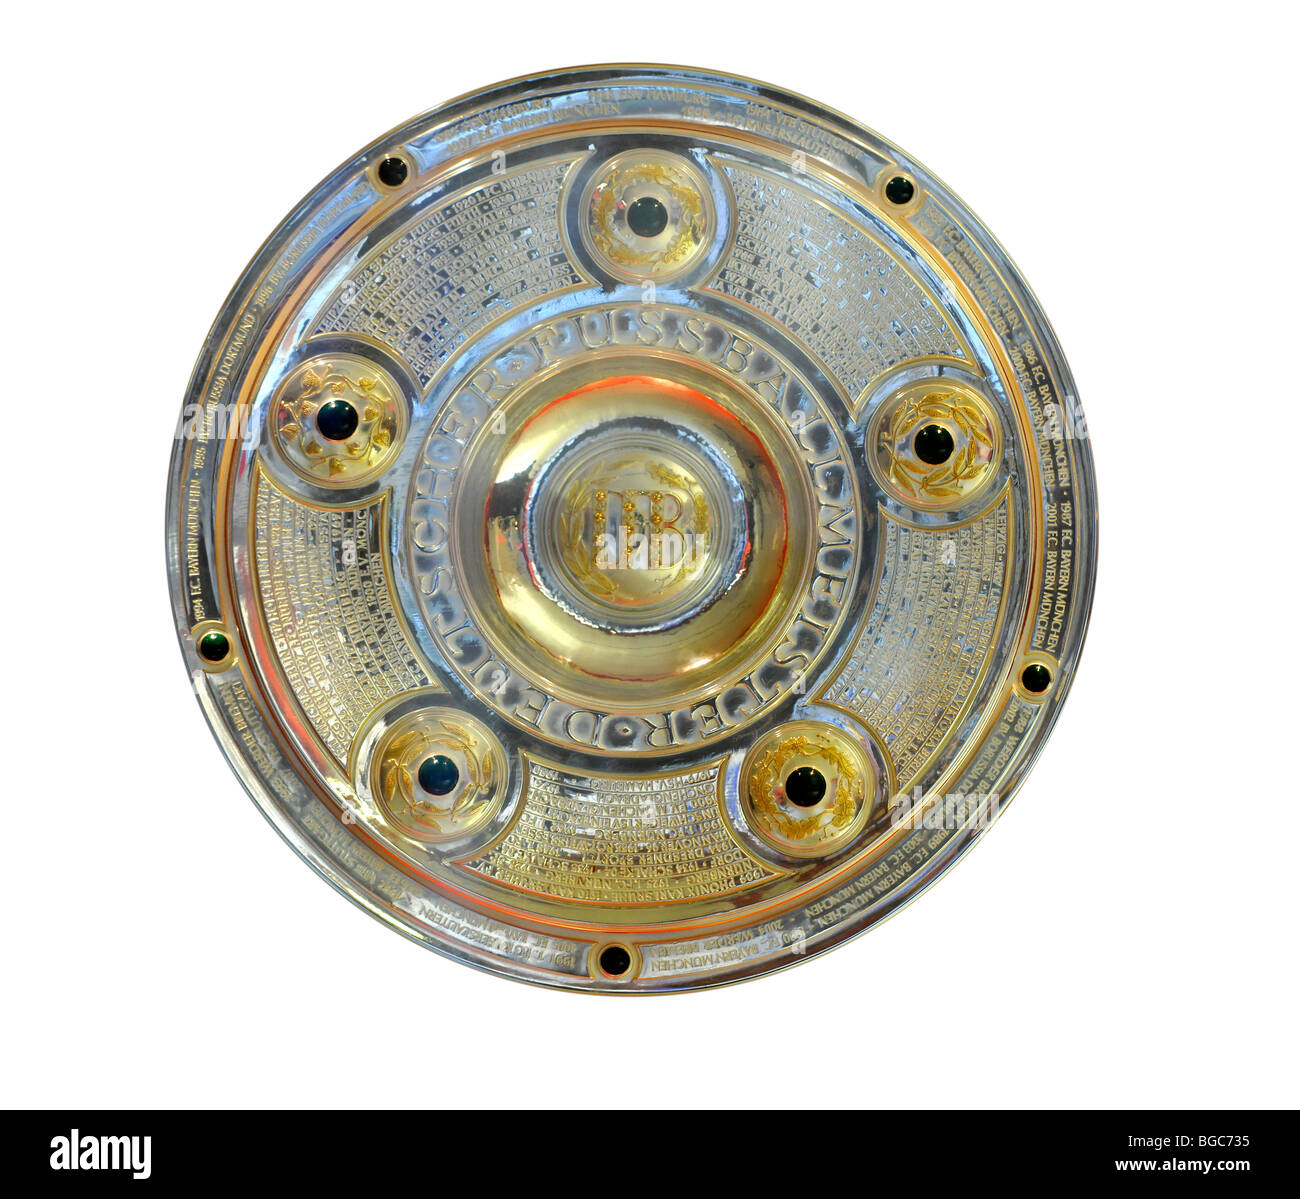 Meisterschale, Deutsche Bundesliga German football league championship  trophy, cut-out Stock Photo - Alamy